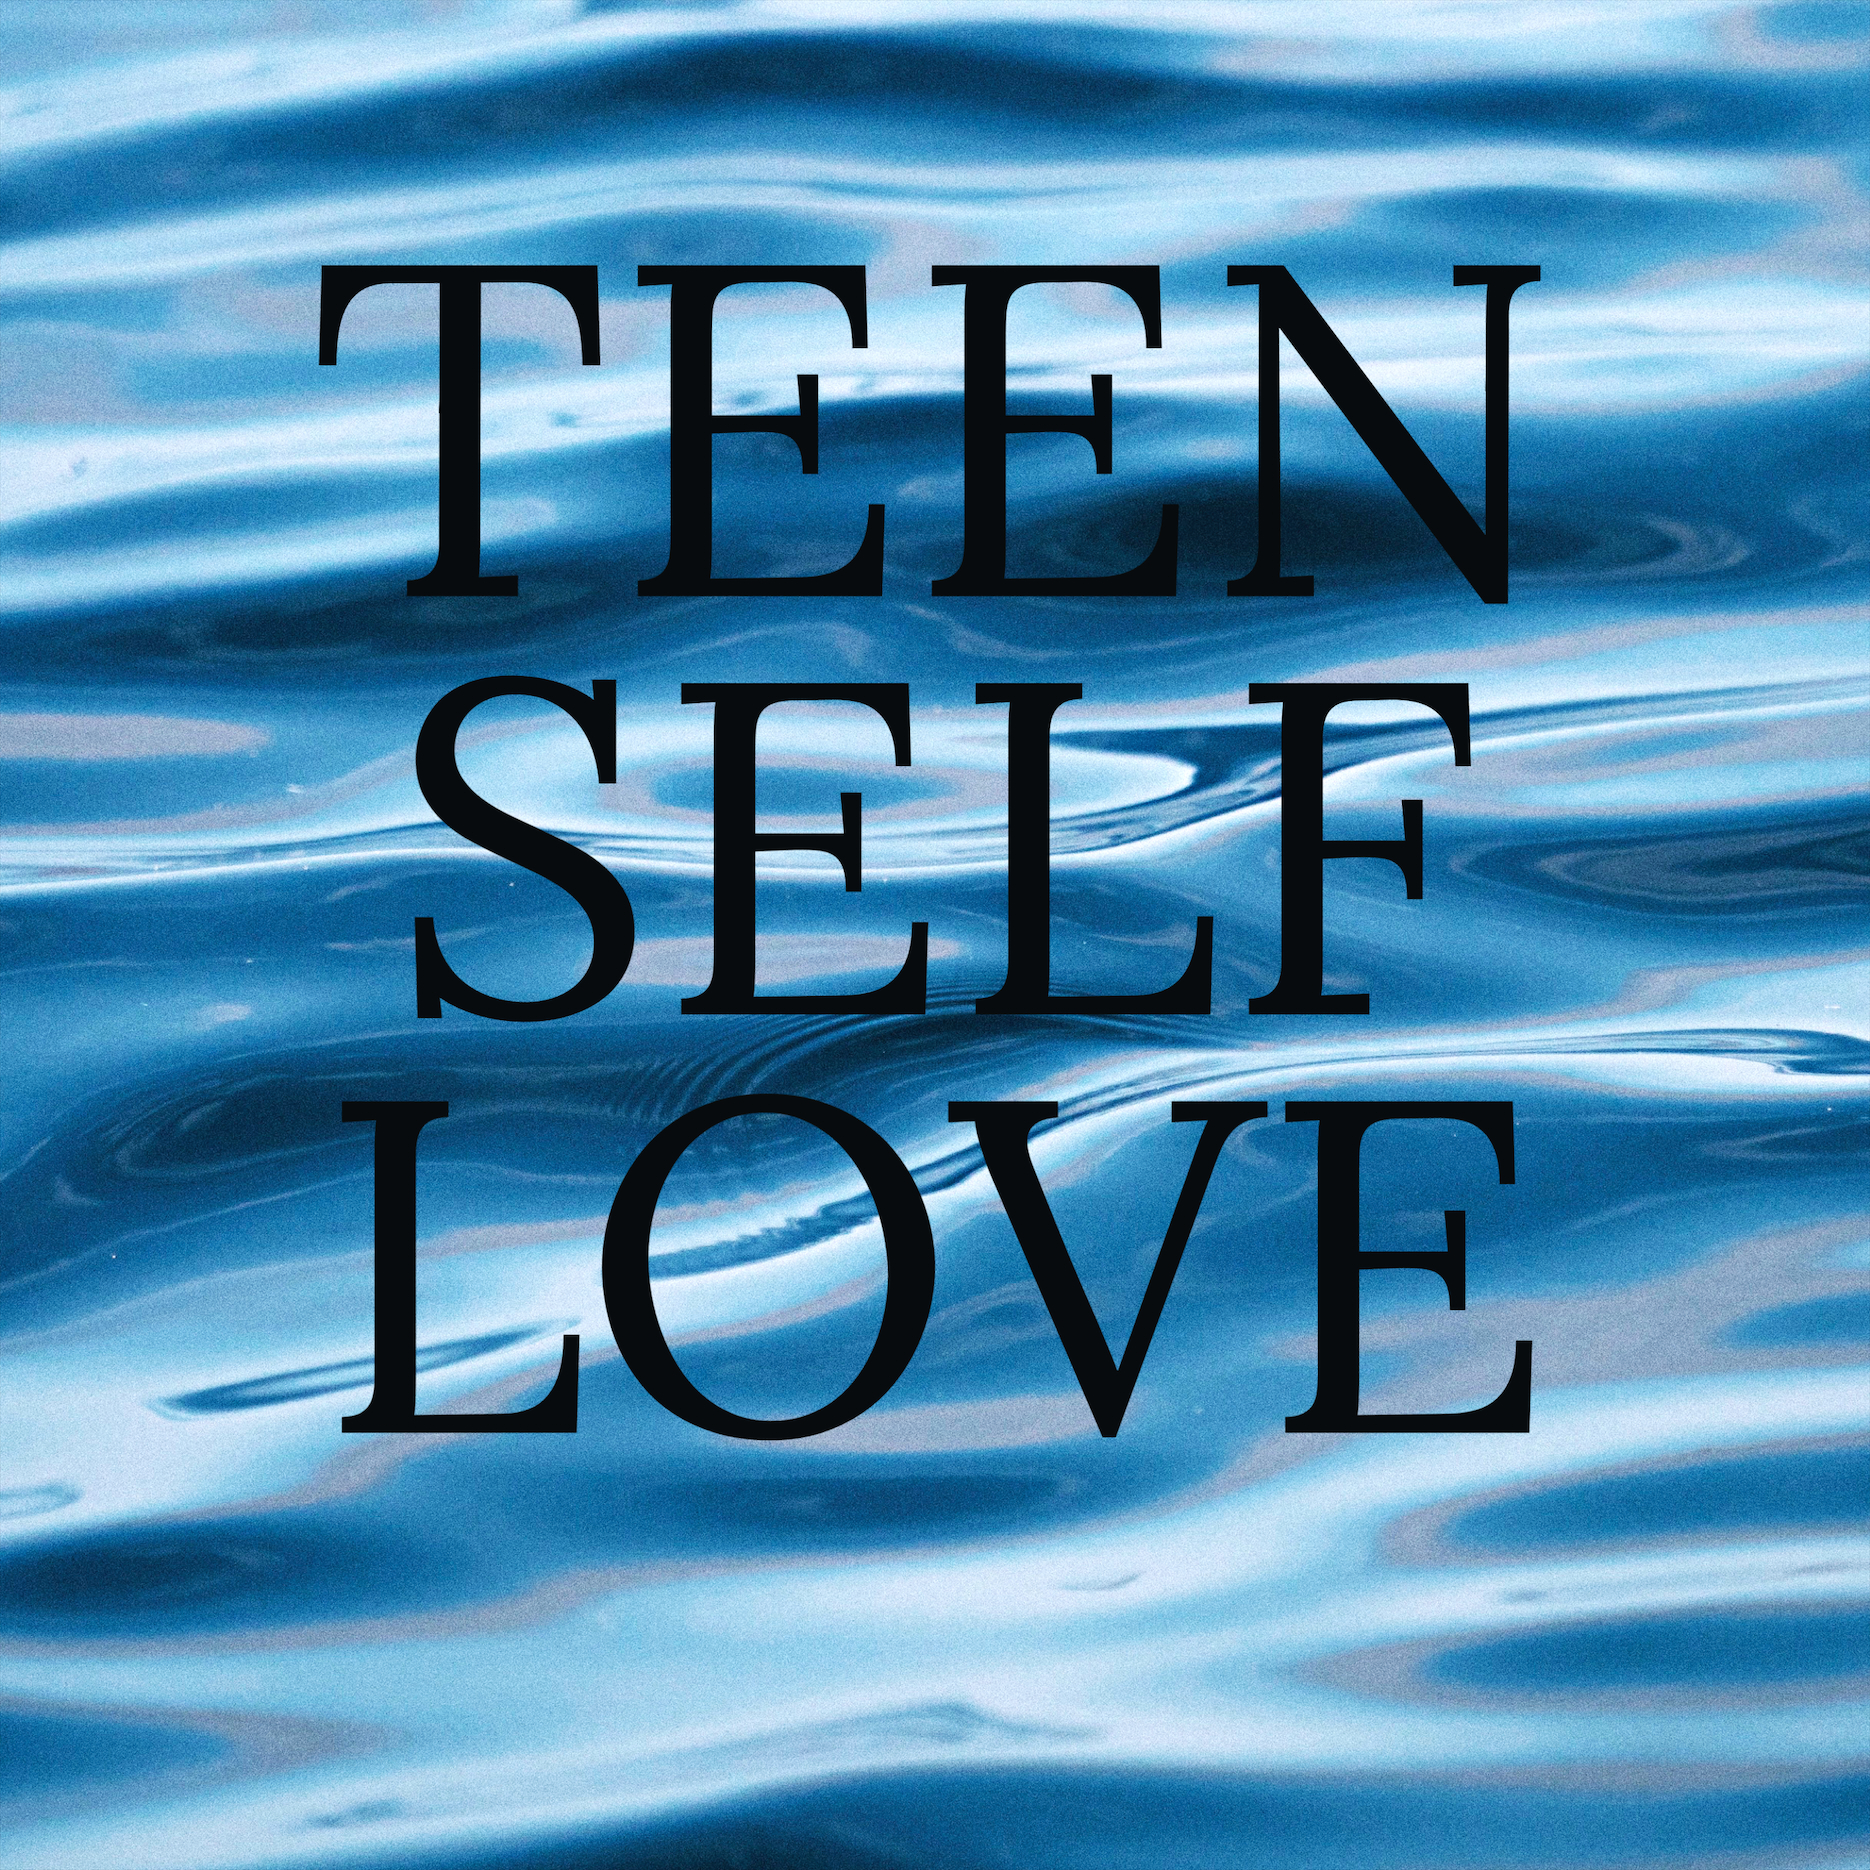 Teen self love, Ep. 3